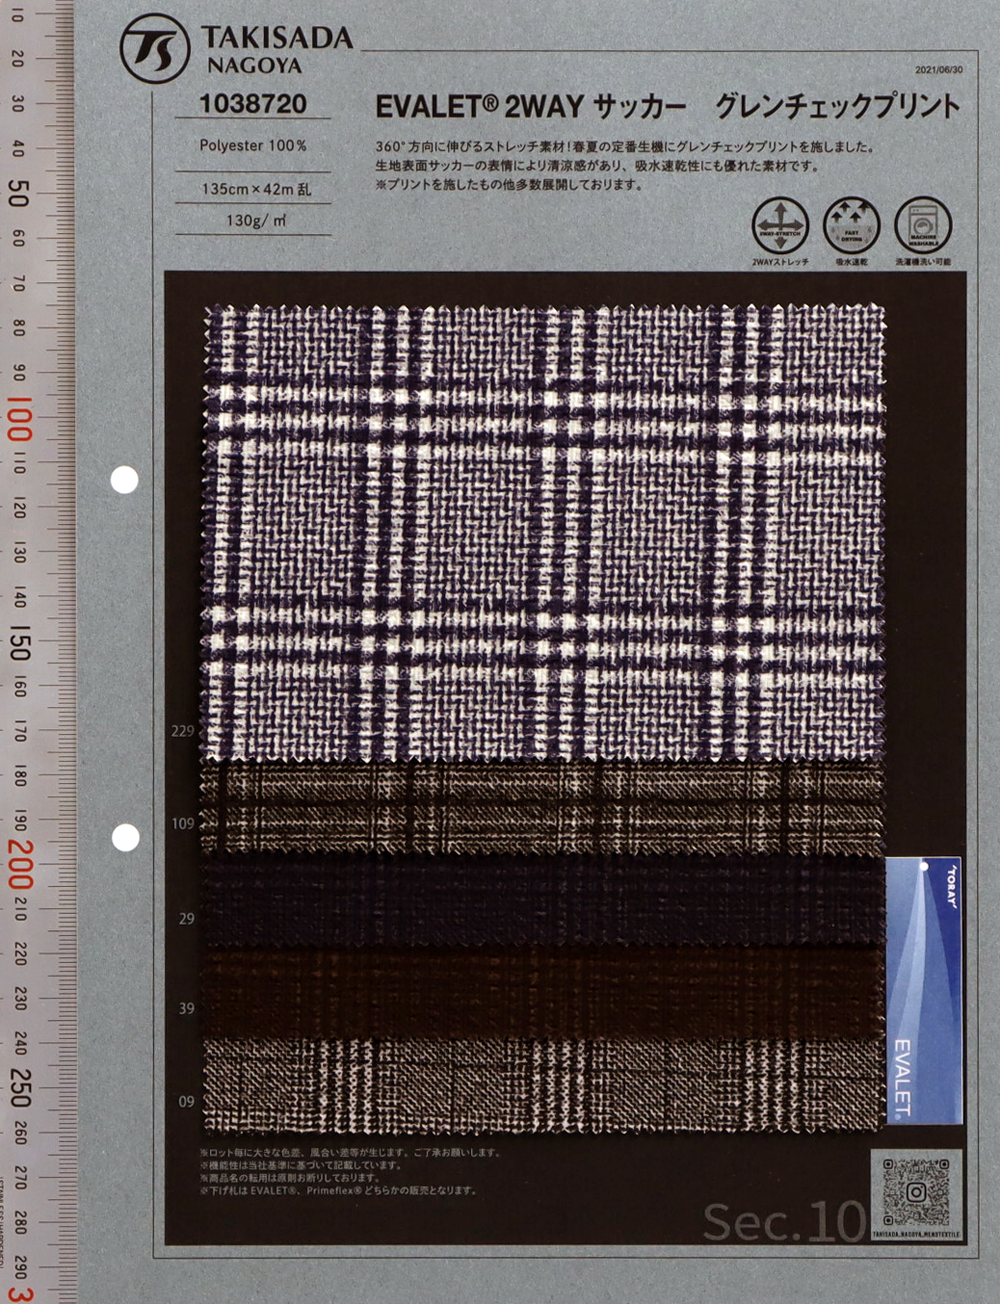 1038720 EVALET® 2WAY Seersucker Glen Check Pt[Textilgewebe] Takisada Nagoya